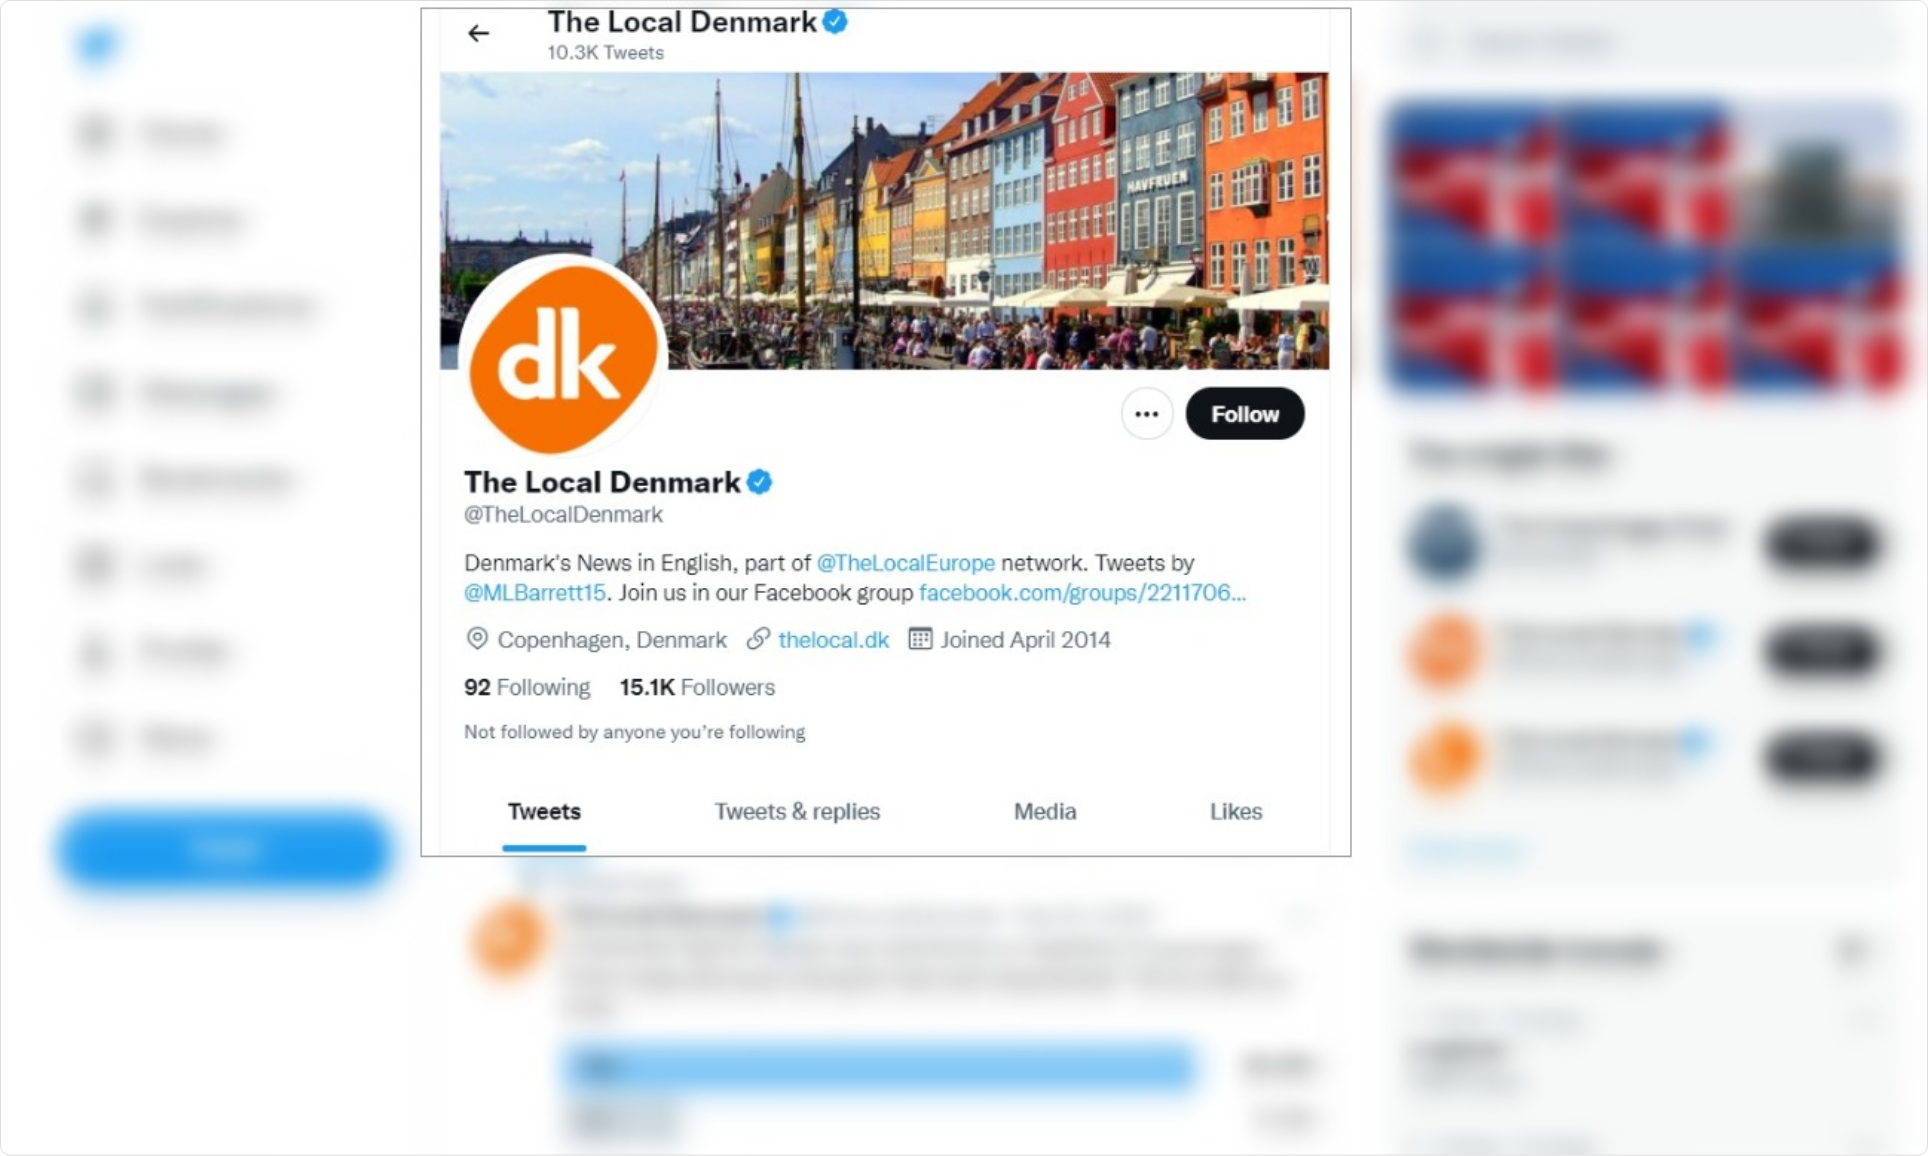 The local Denmark twitter bio